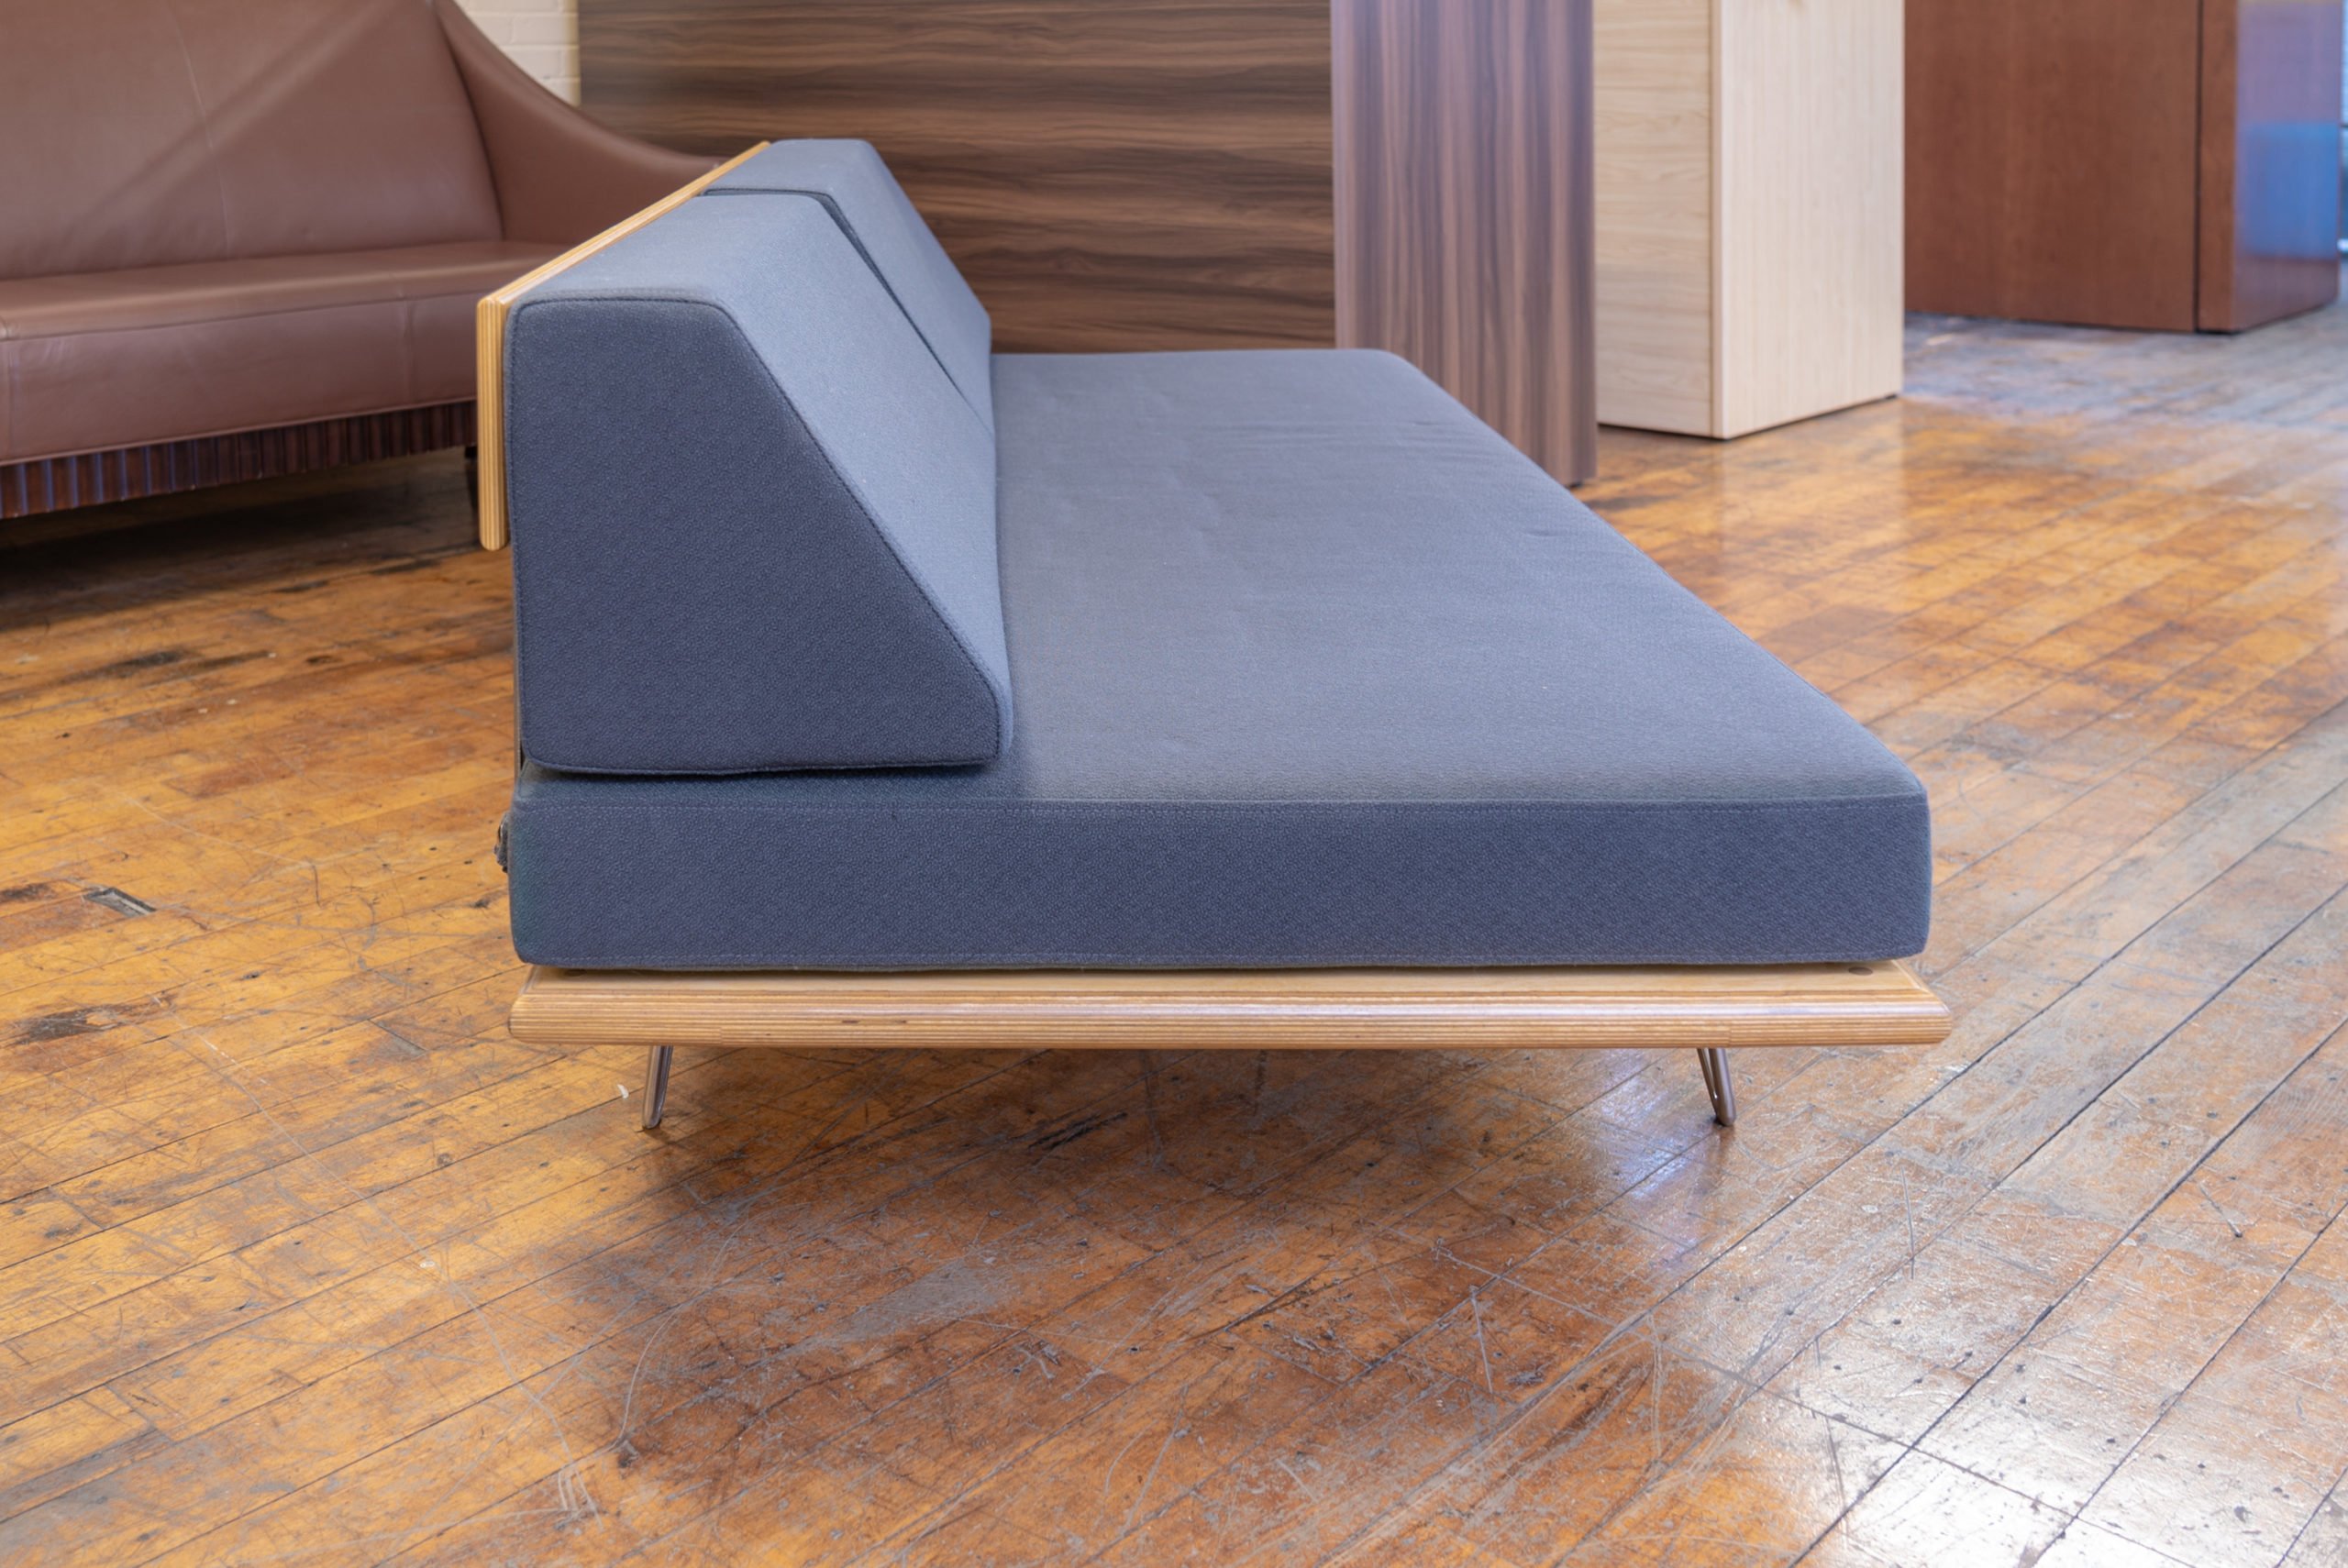 modernica-case-study-furniture®-v-leg-daybed